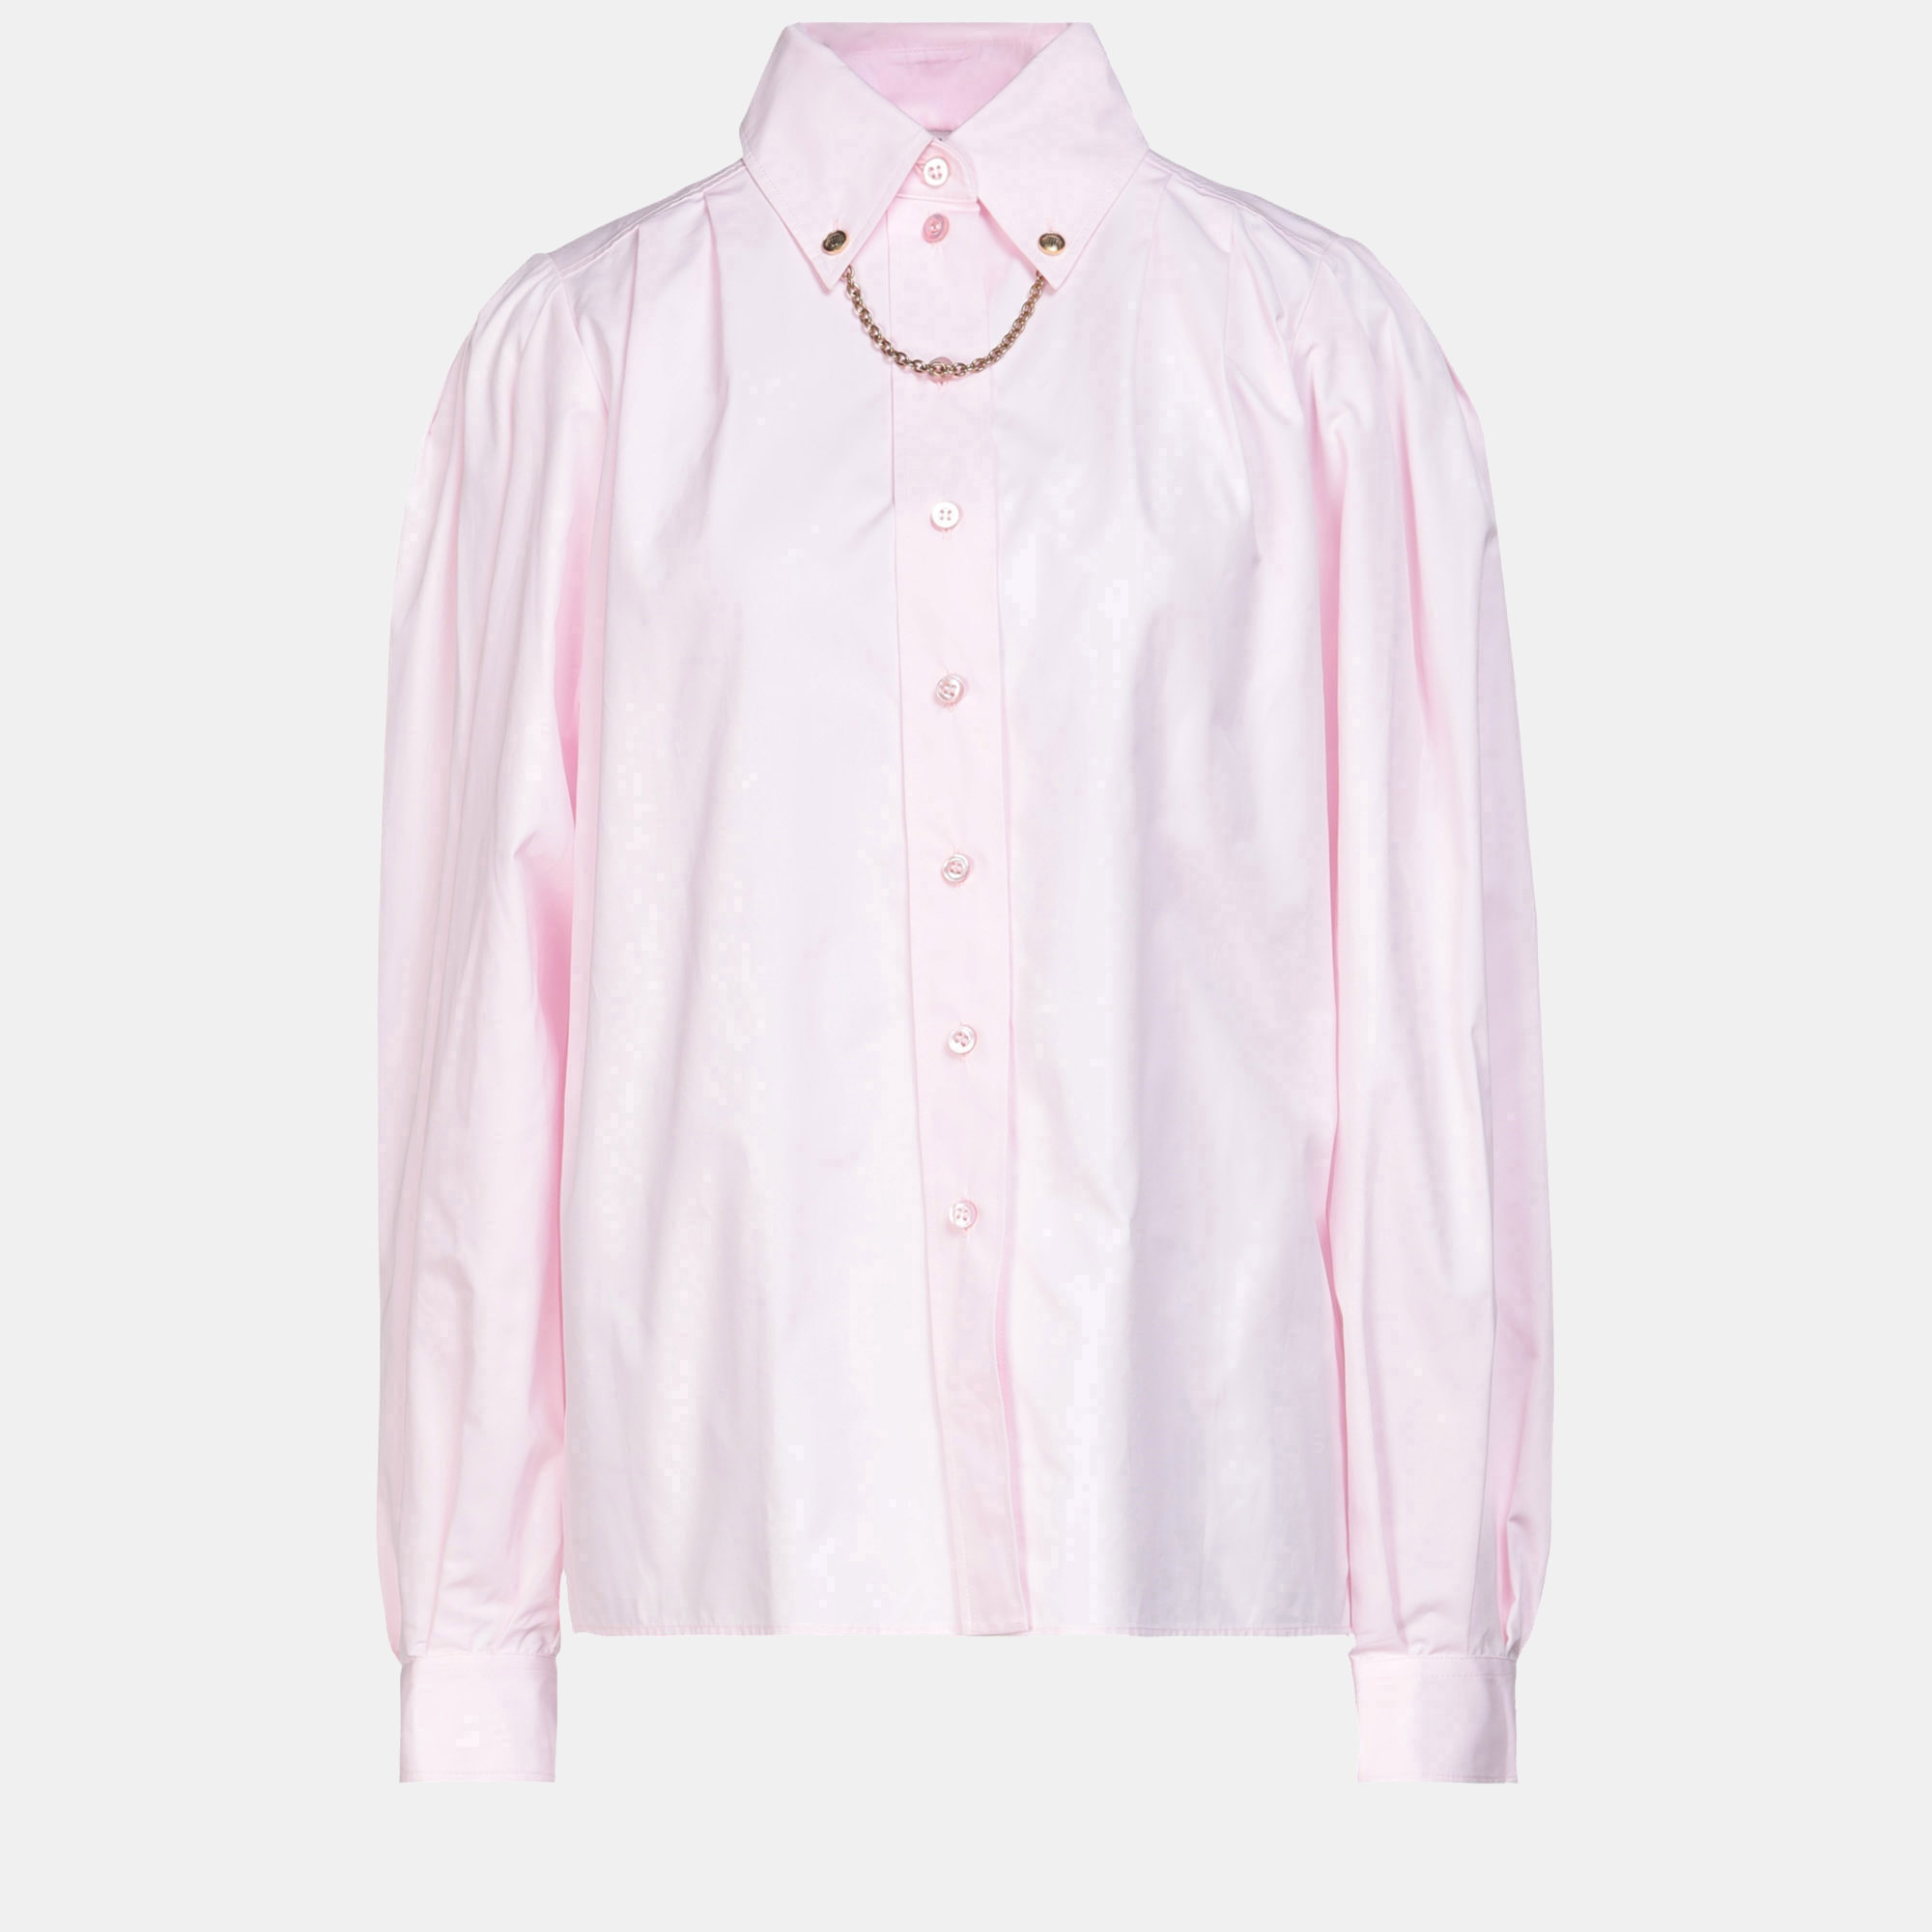 Givenchy cotton shirt 40